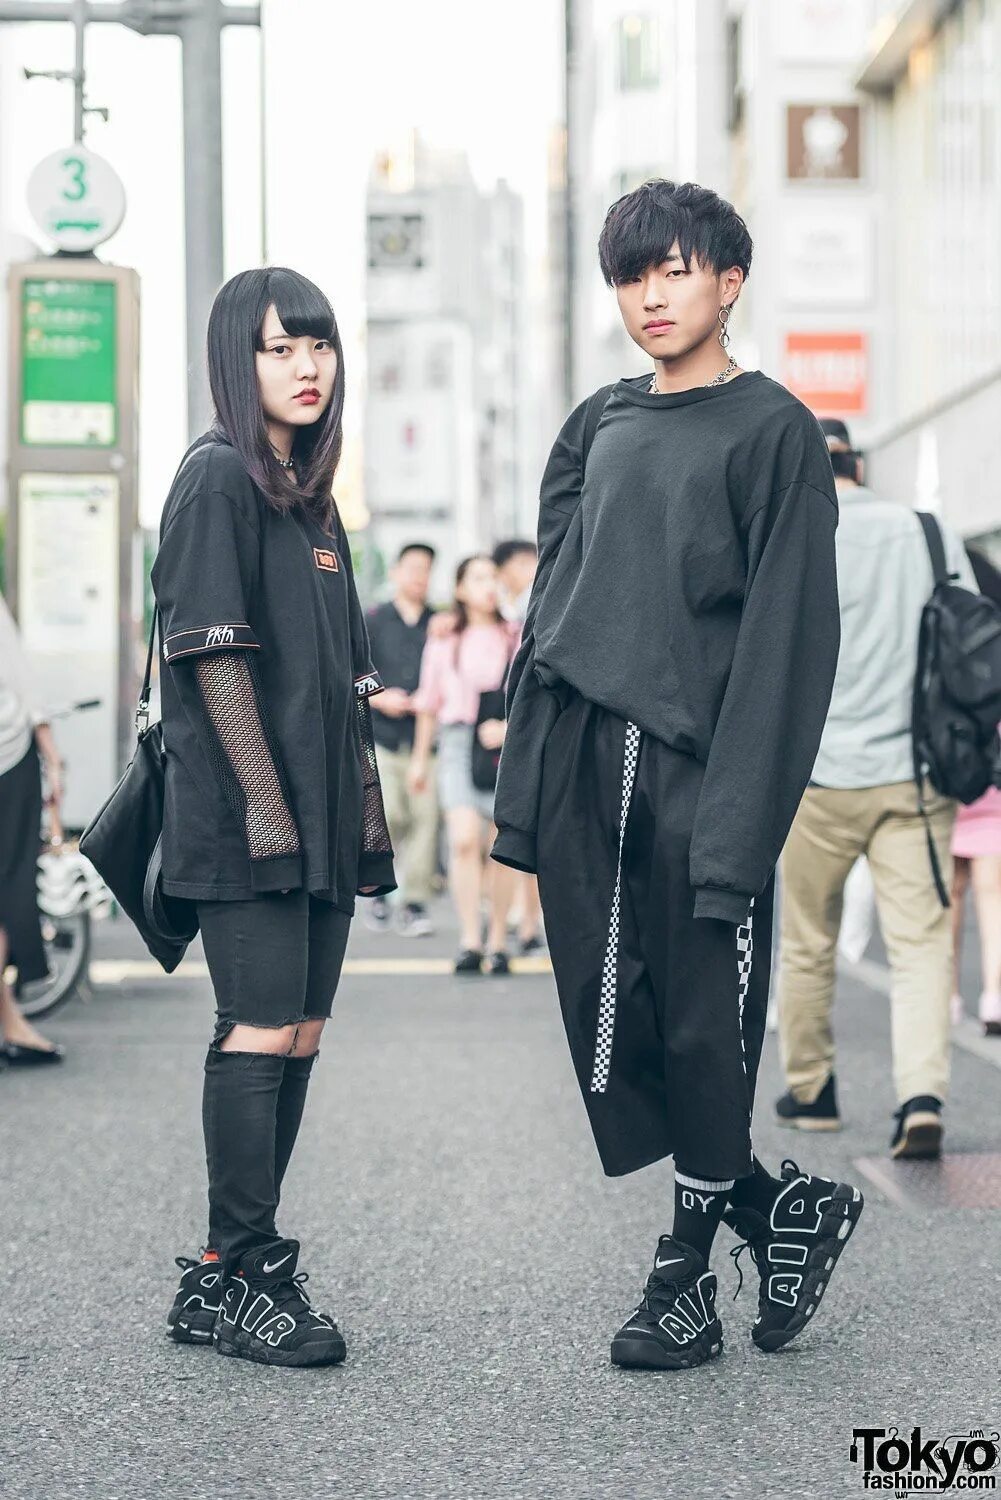 Токийские одежда. Стиль Харадзюку черный. Харадзюку черная одежда. Темное Харадзюку. Харадзюку одежда мужская.